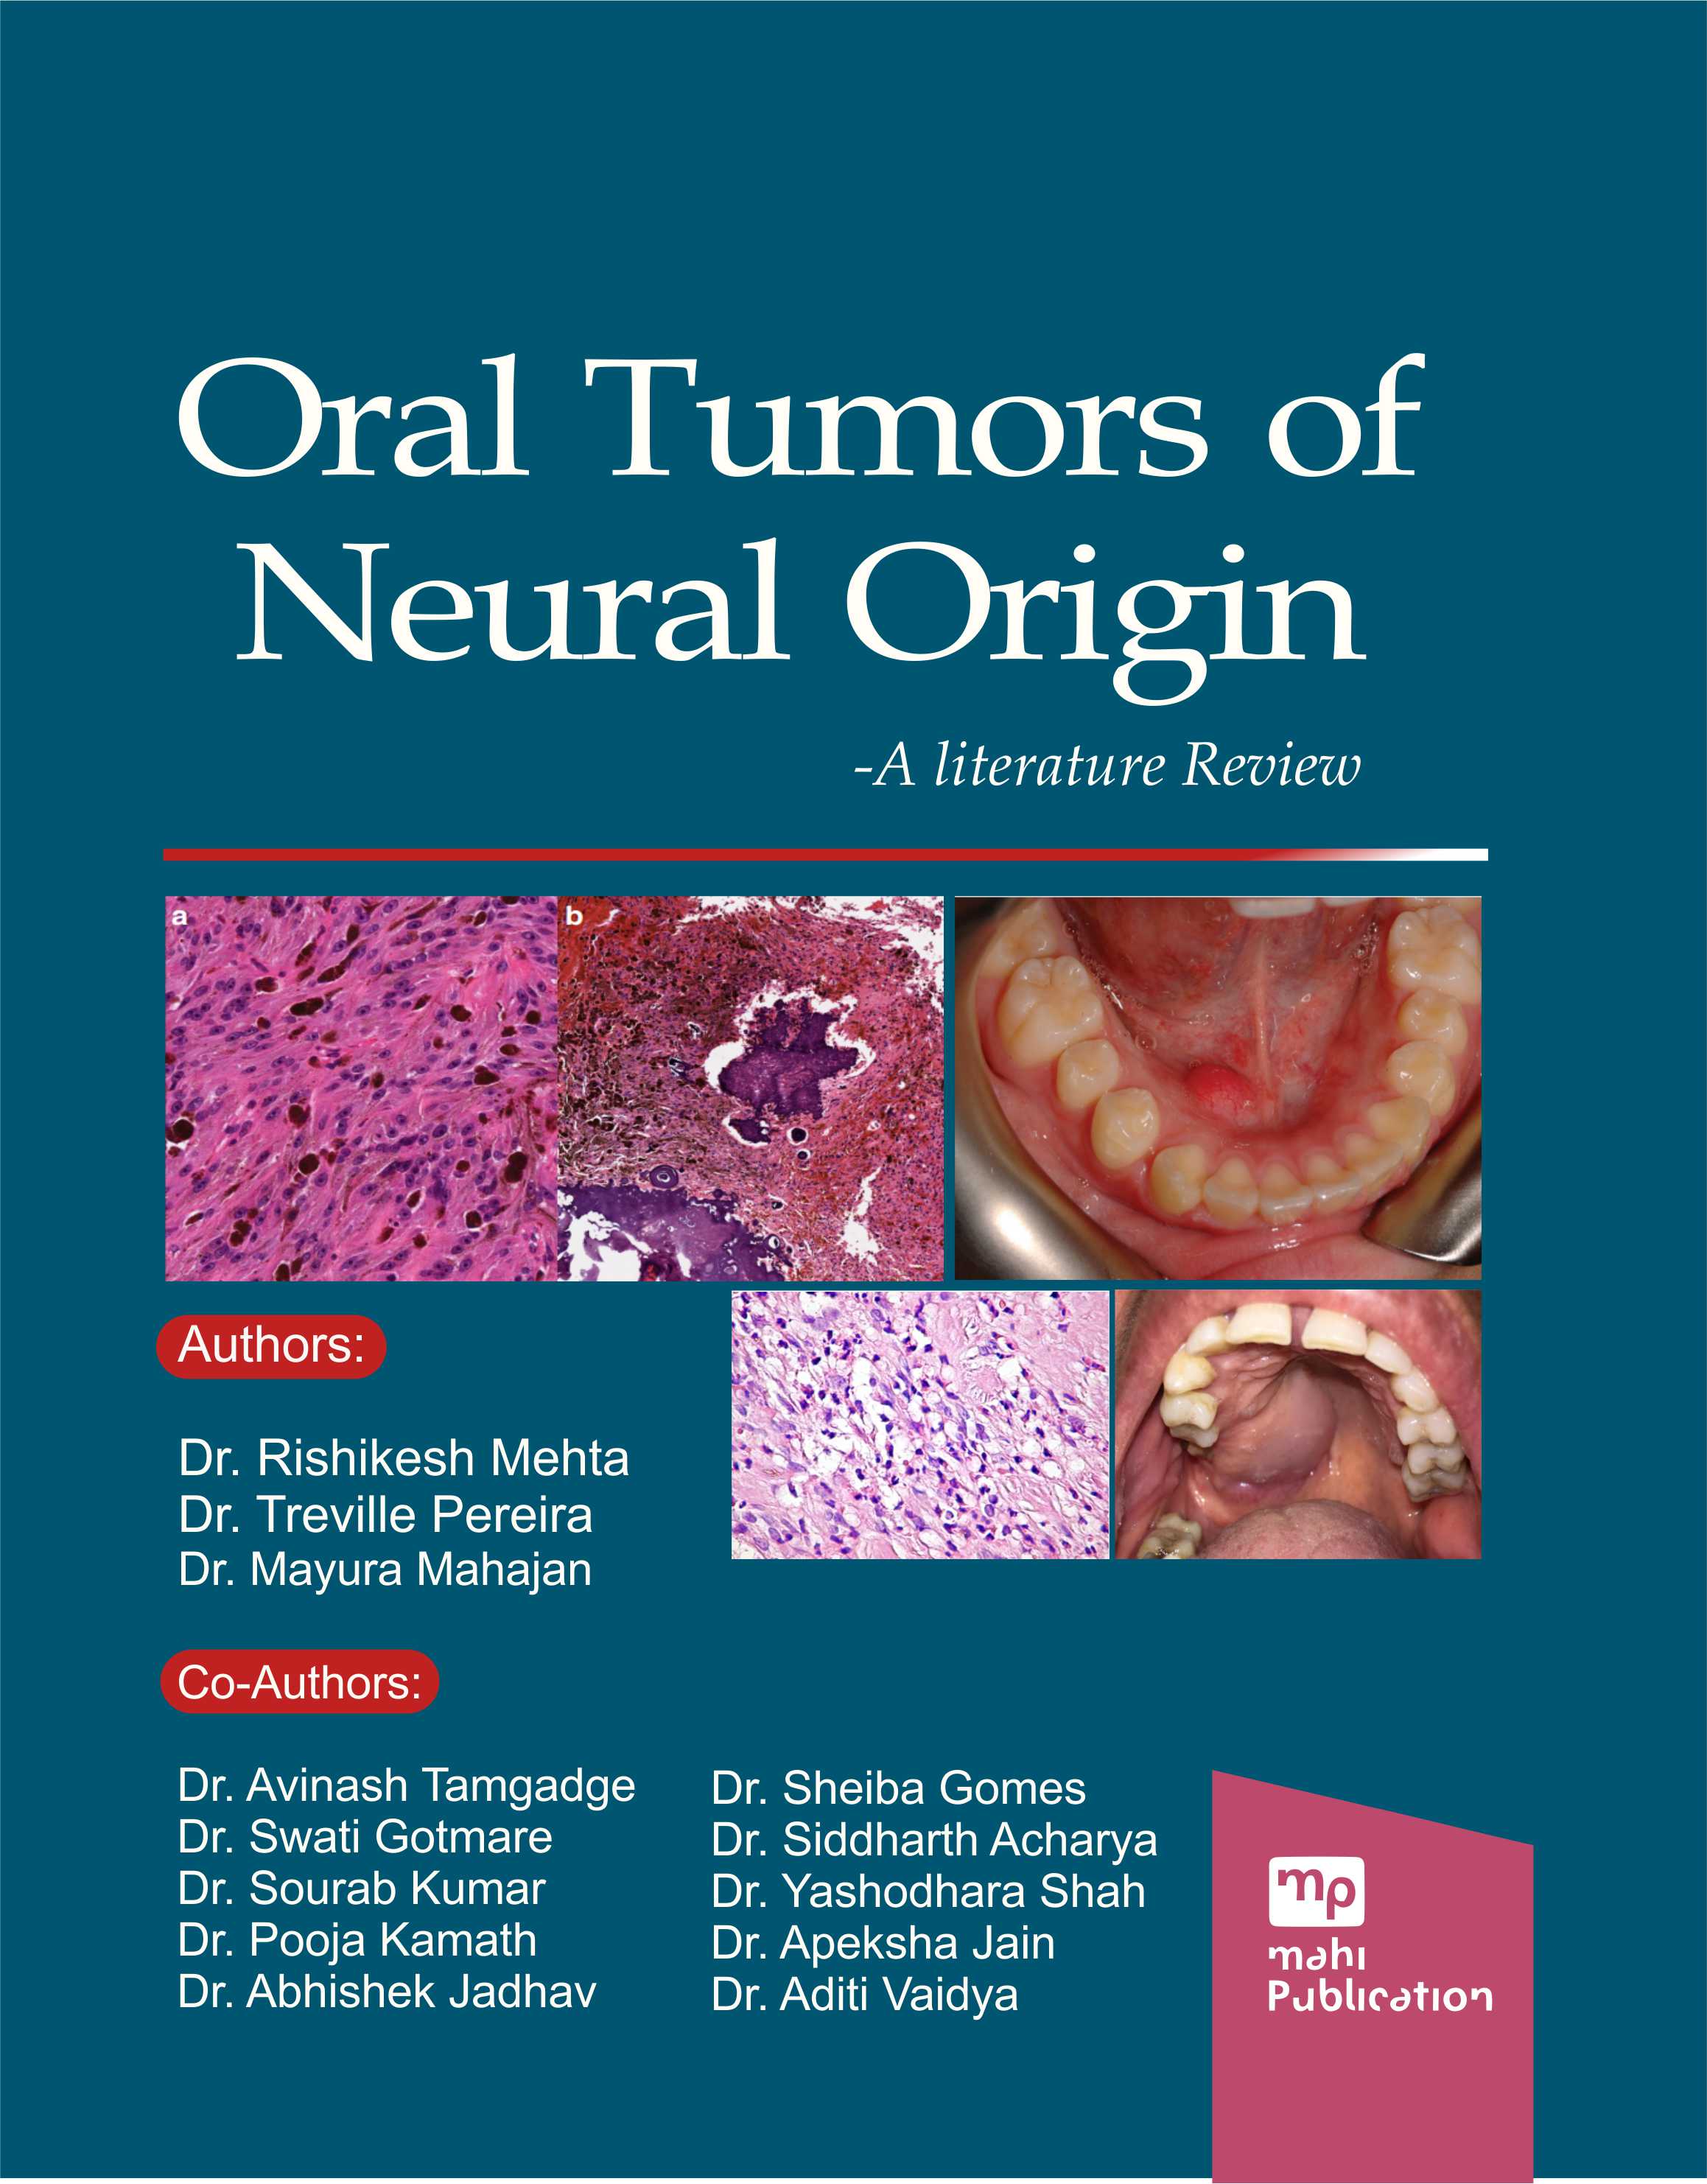 Oral Tumors of Neural Origin - A Literature Review